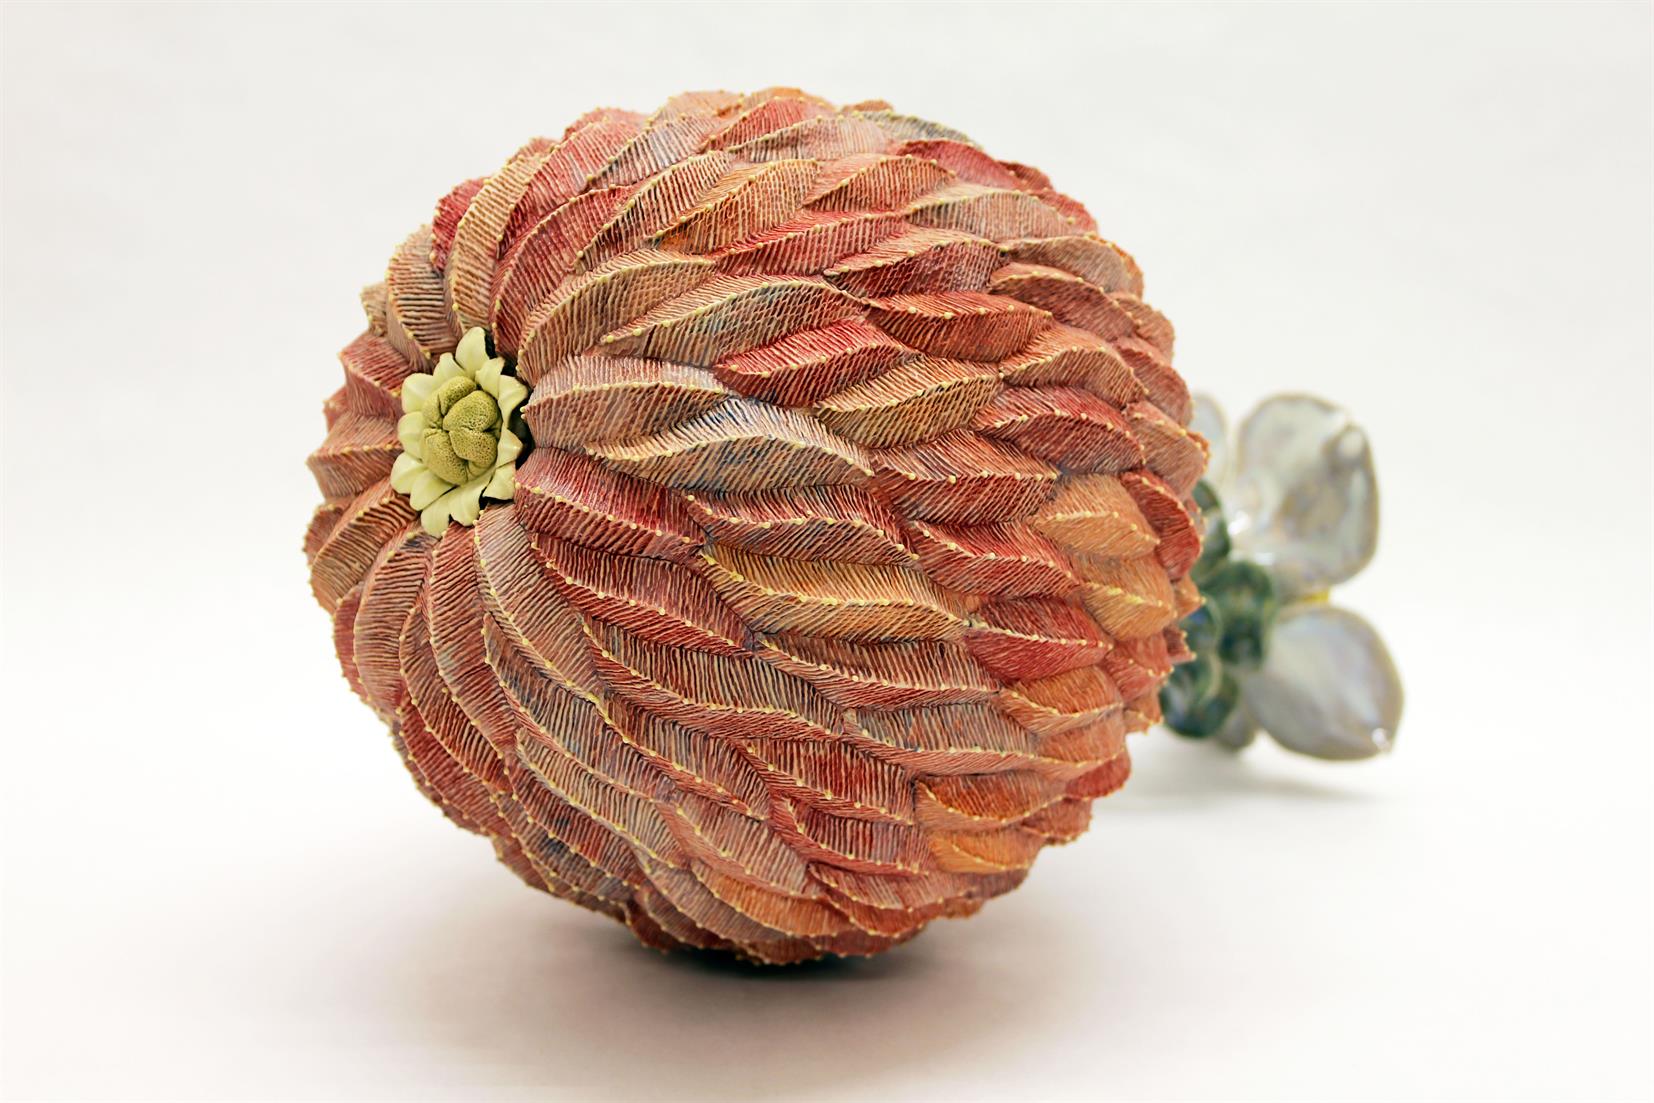 Imaginative Botanical Ceramics Invent New Fruits and Flowers